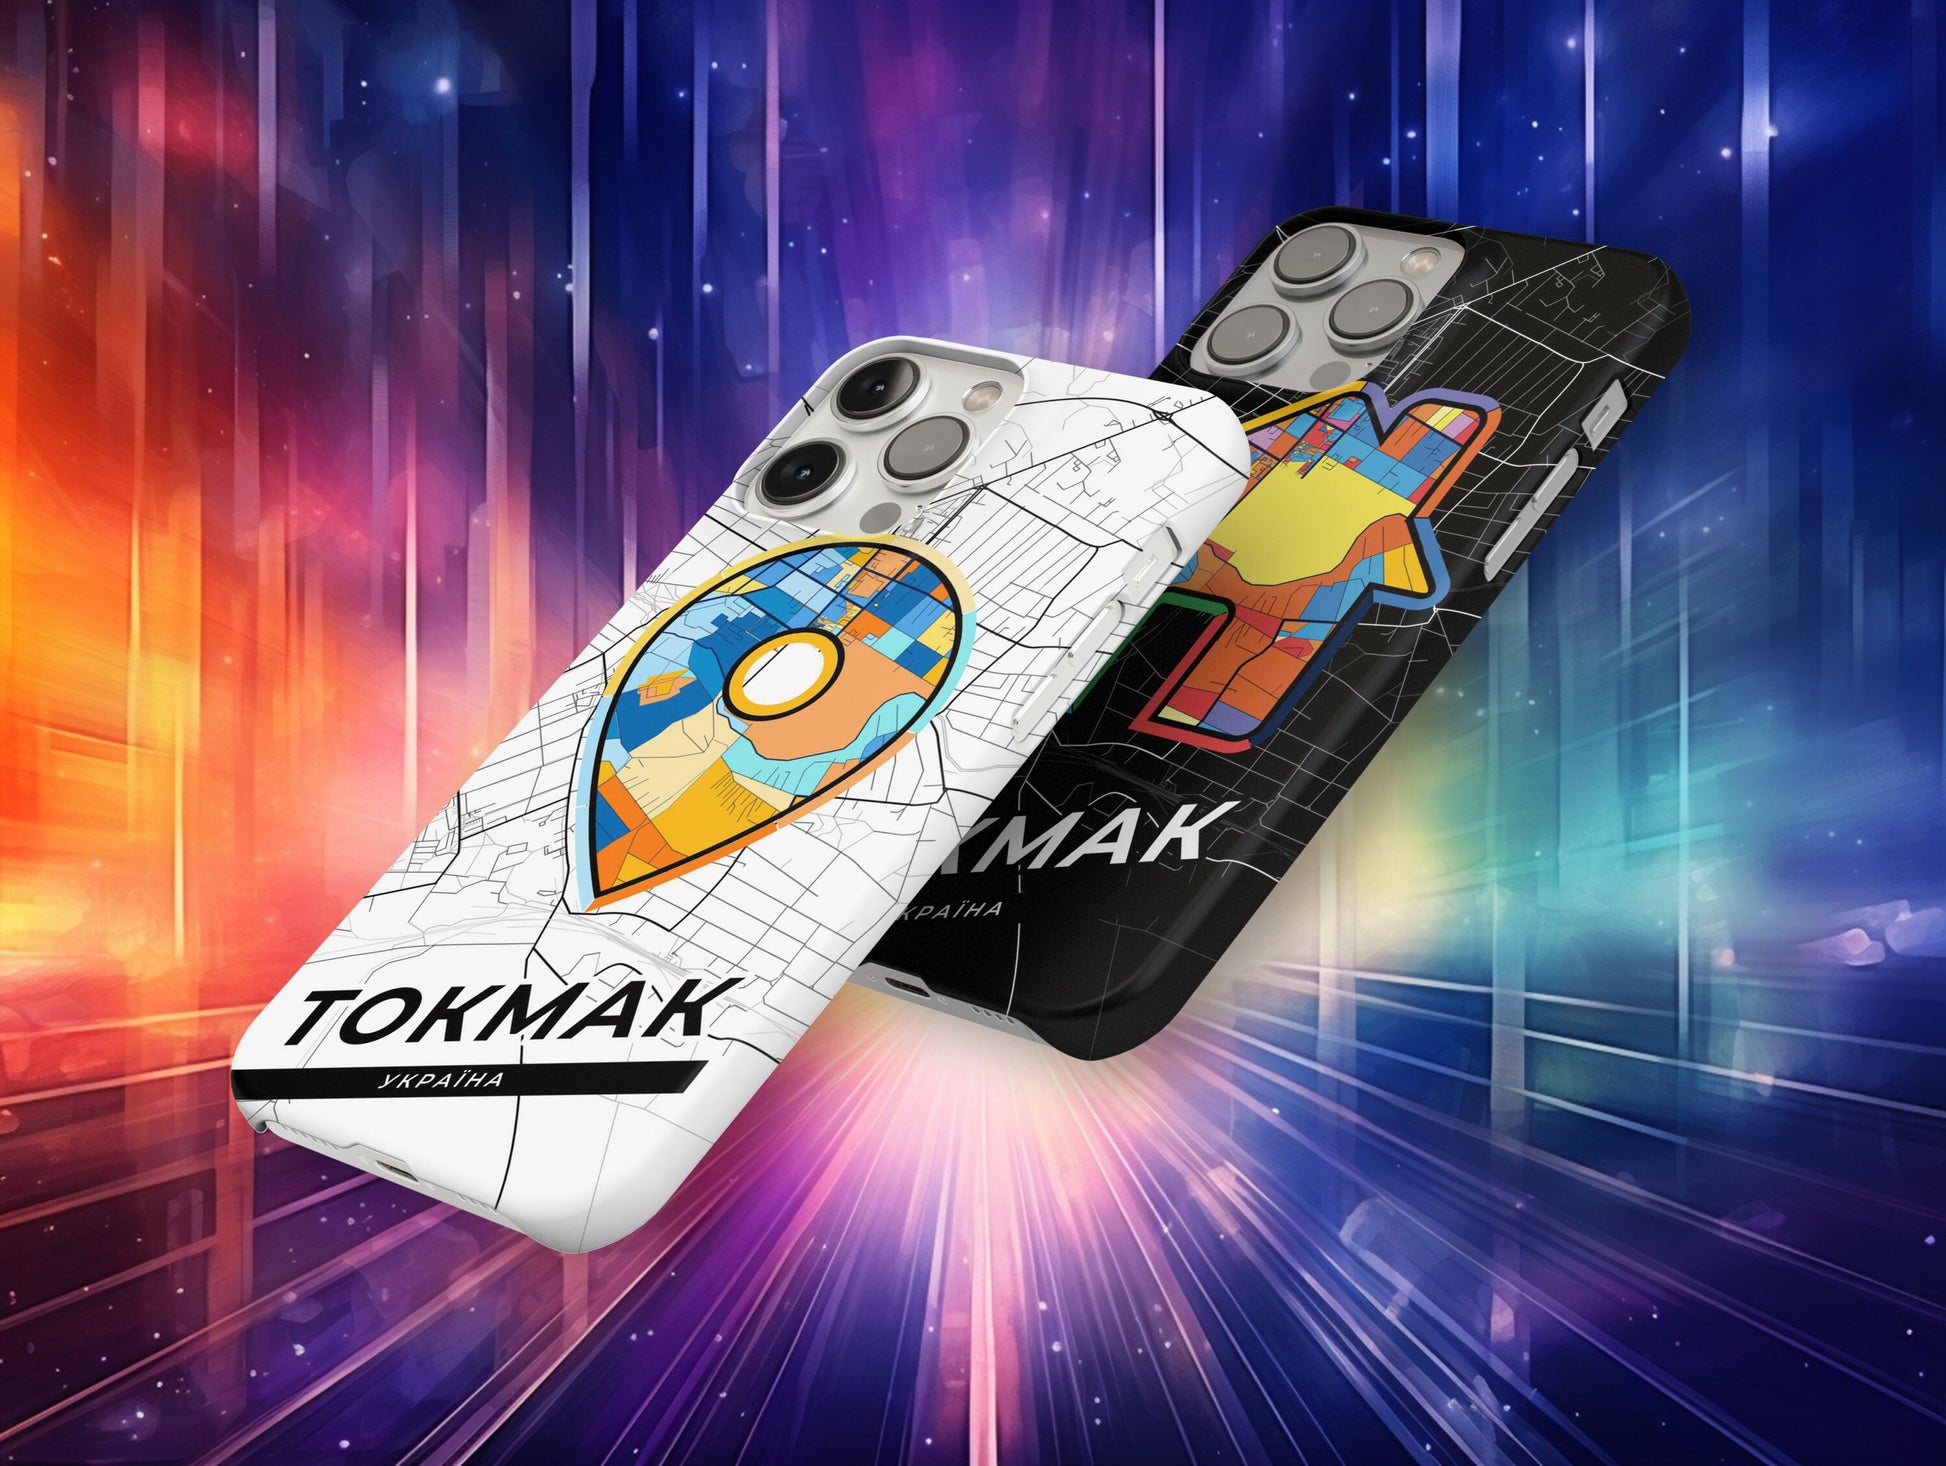 Tokmak Ukraine slim phone case with colorful icon